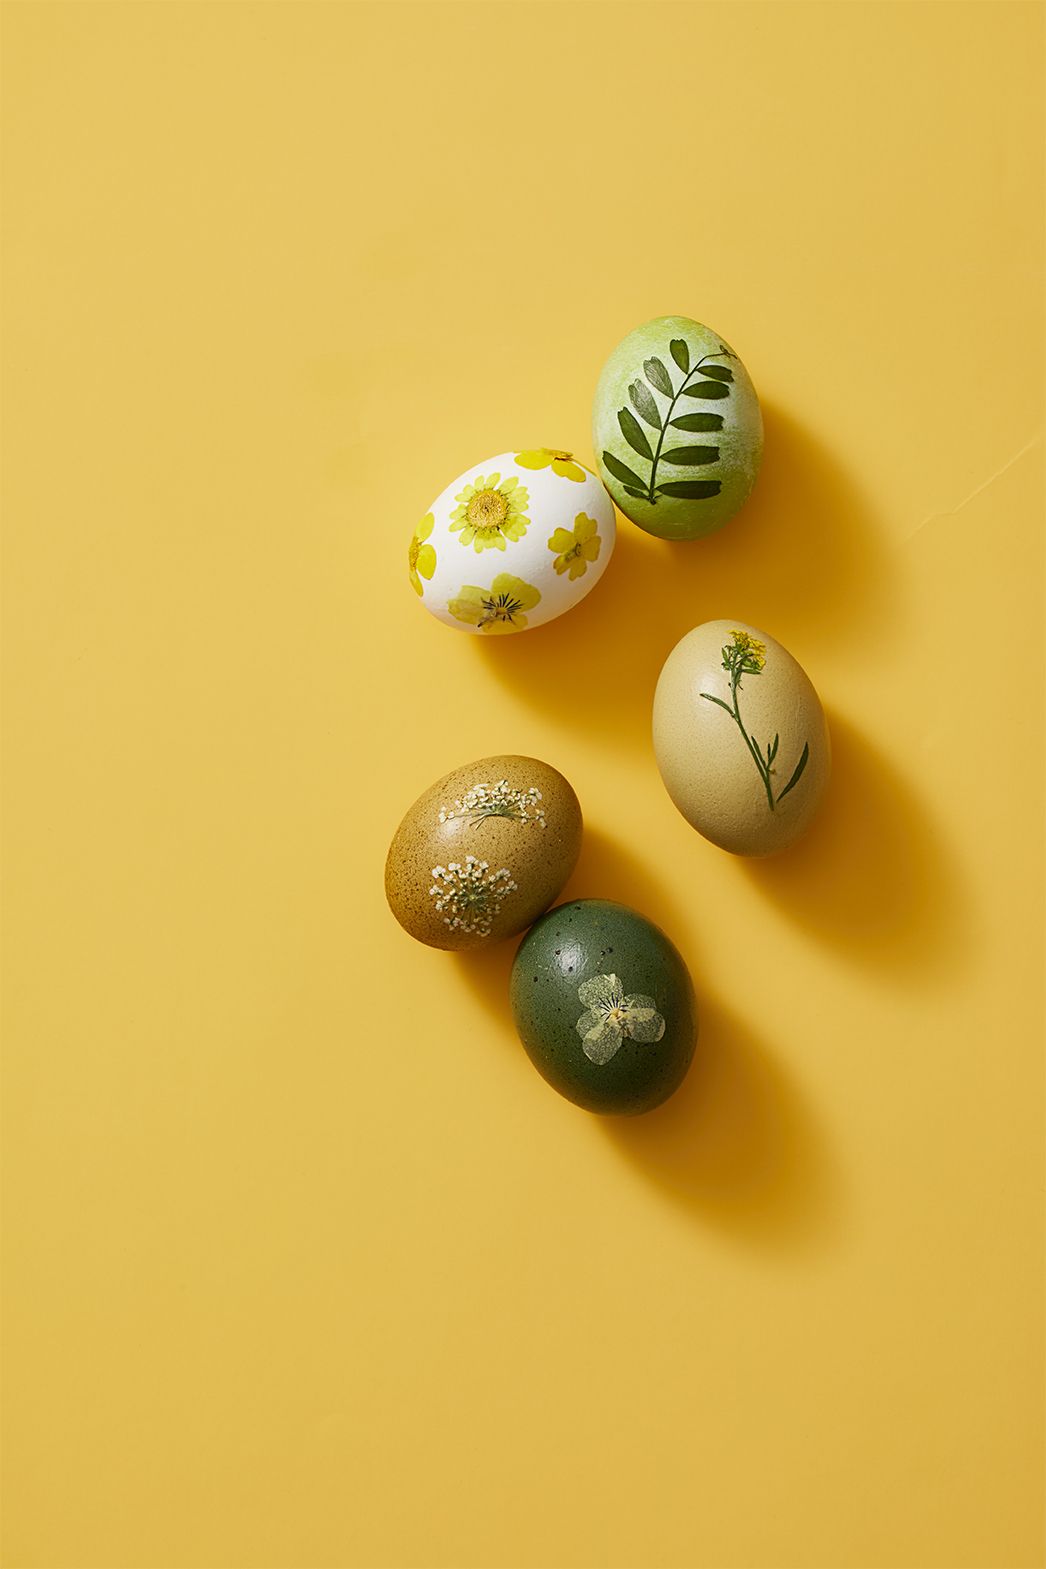 egg painting ideas